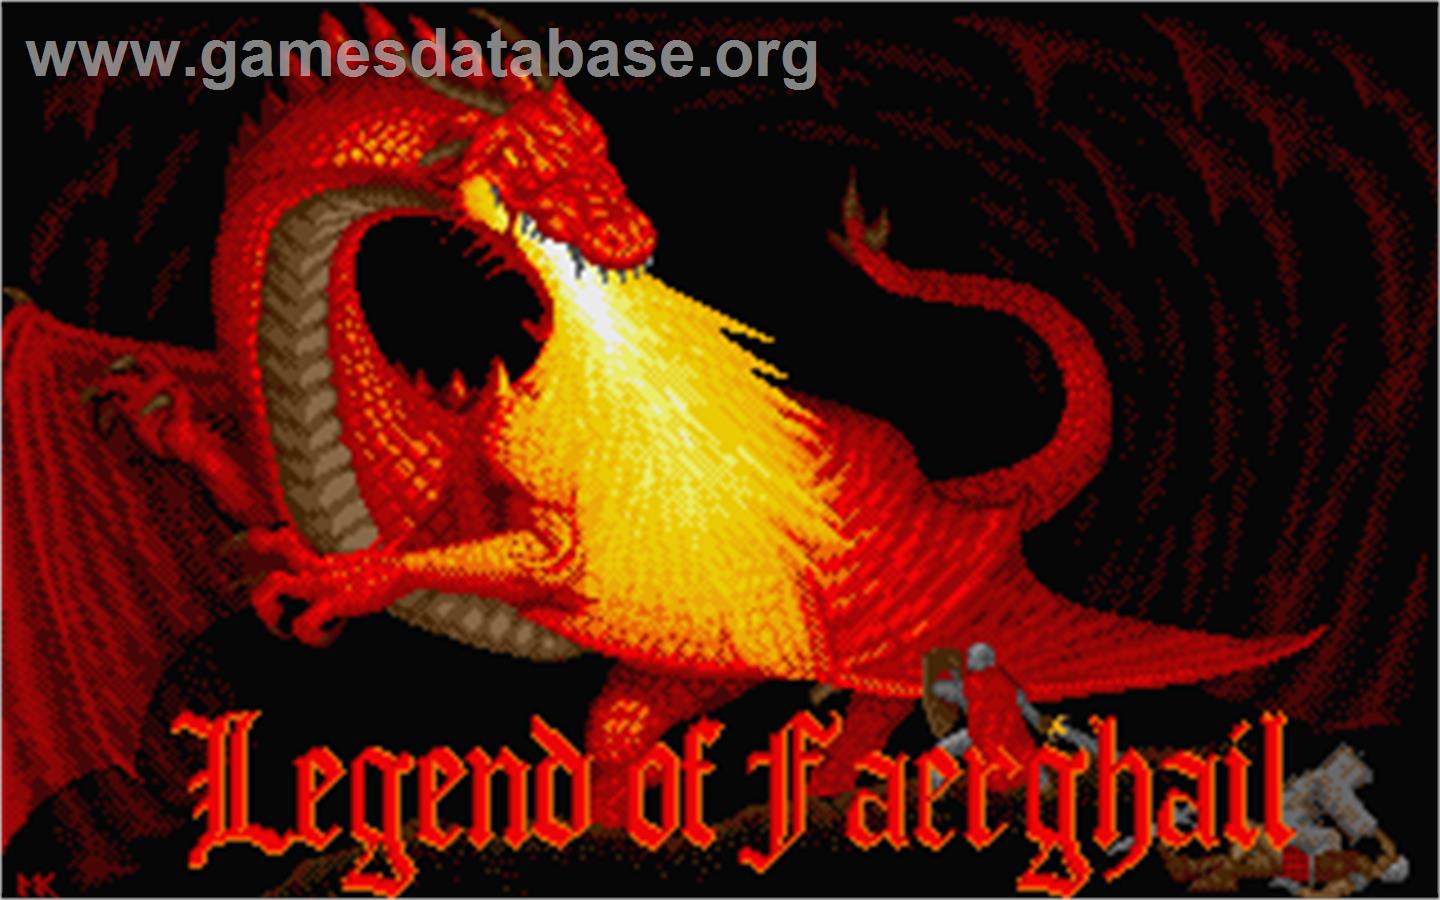 Legend of Faerghail - Atari ST - Artwork - Title Screen